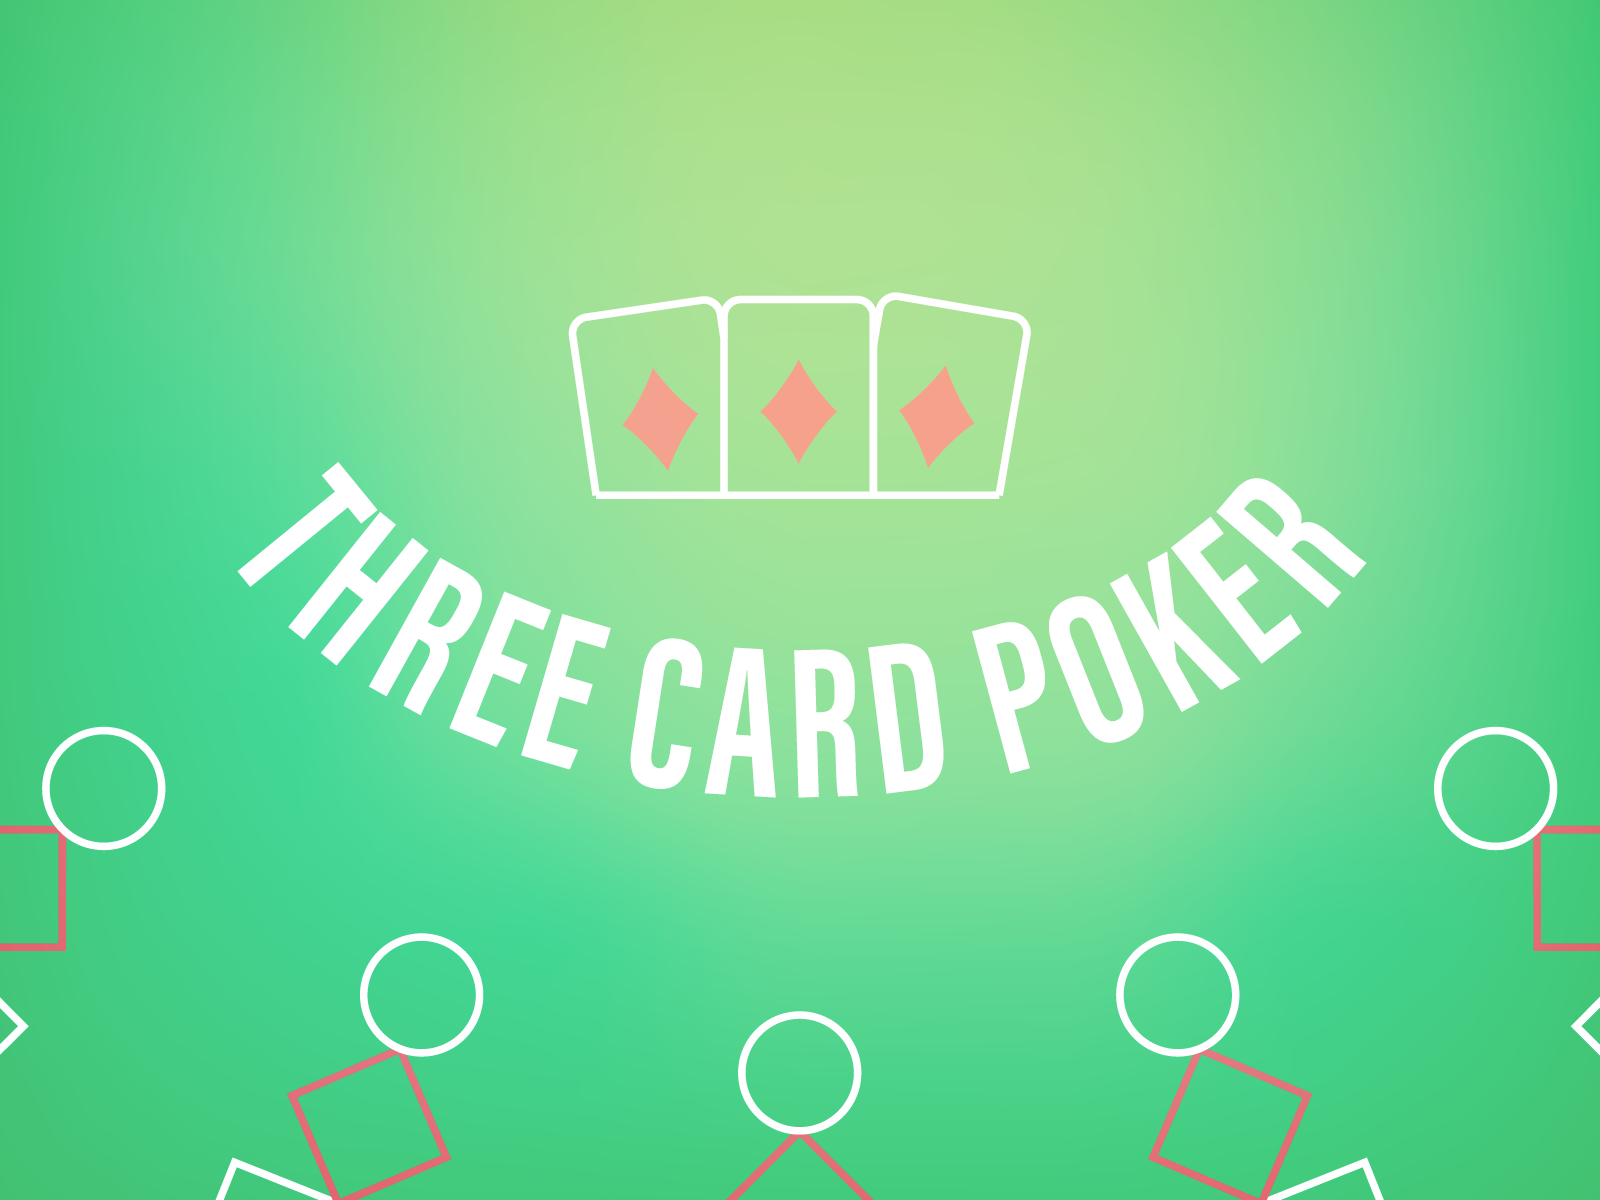 3-card poker